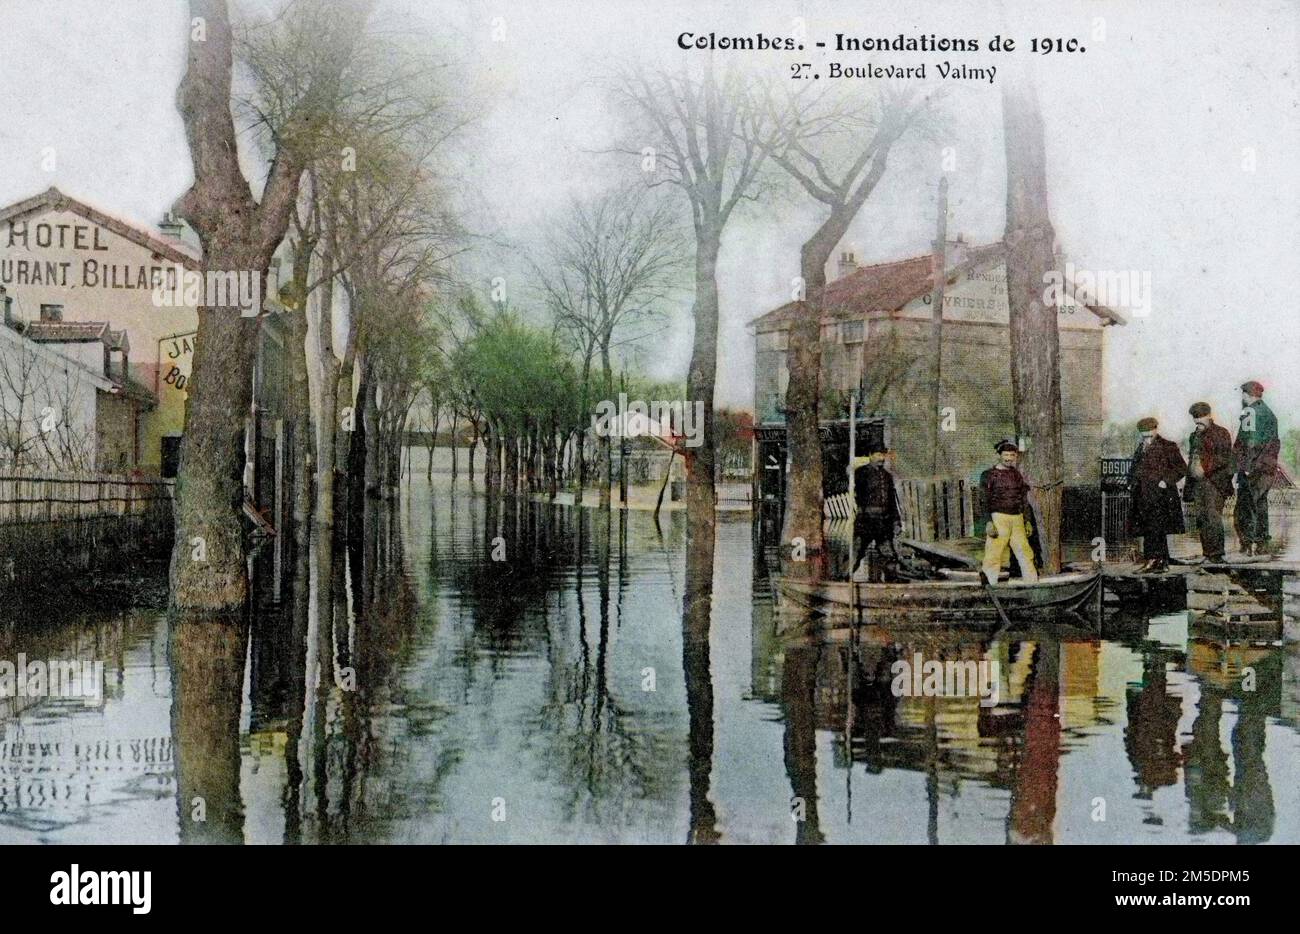 Flood in Colombes 1910 - Inondations de Colombes en janvier 1910 - Boulevard Valmy Stock Photo